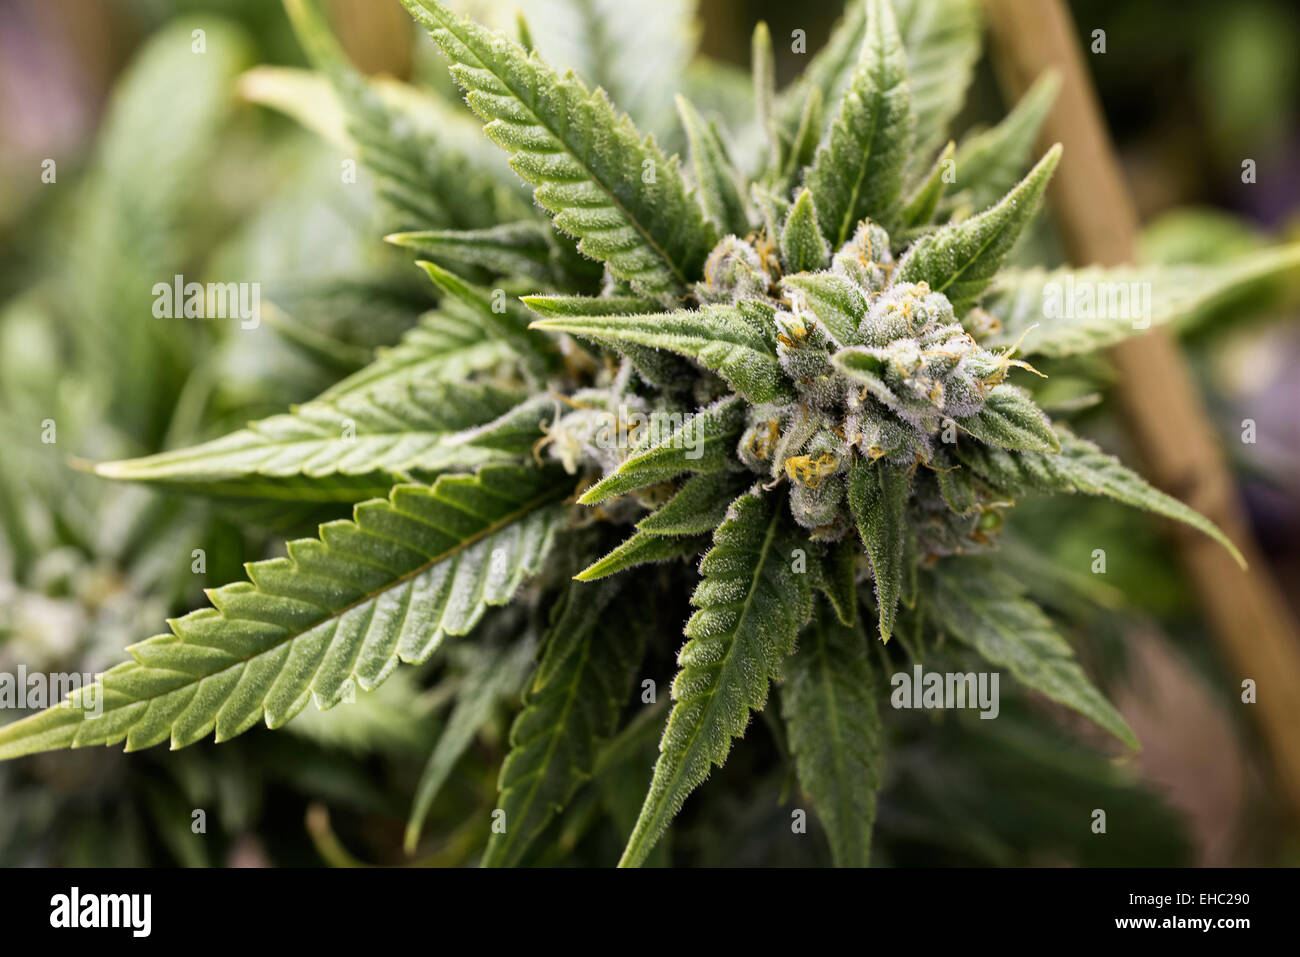 https://c8.alamy.com/comp/EHC290/a-close-up-of-a-medical-marijuana-plant-in-a-grow-room-in-oregon-the-EHC290.jpg